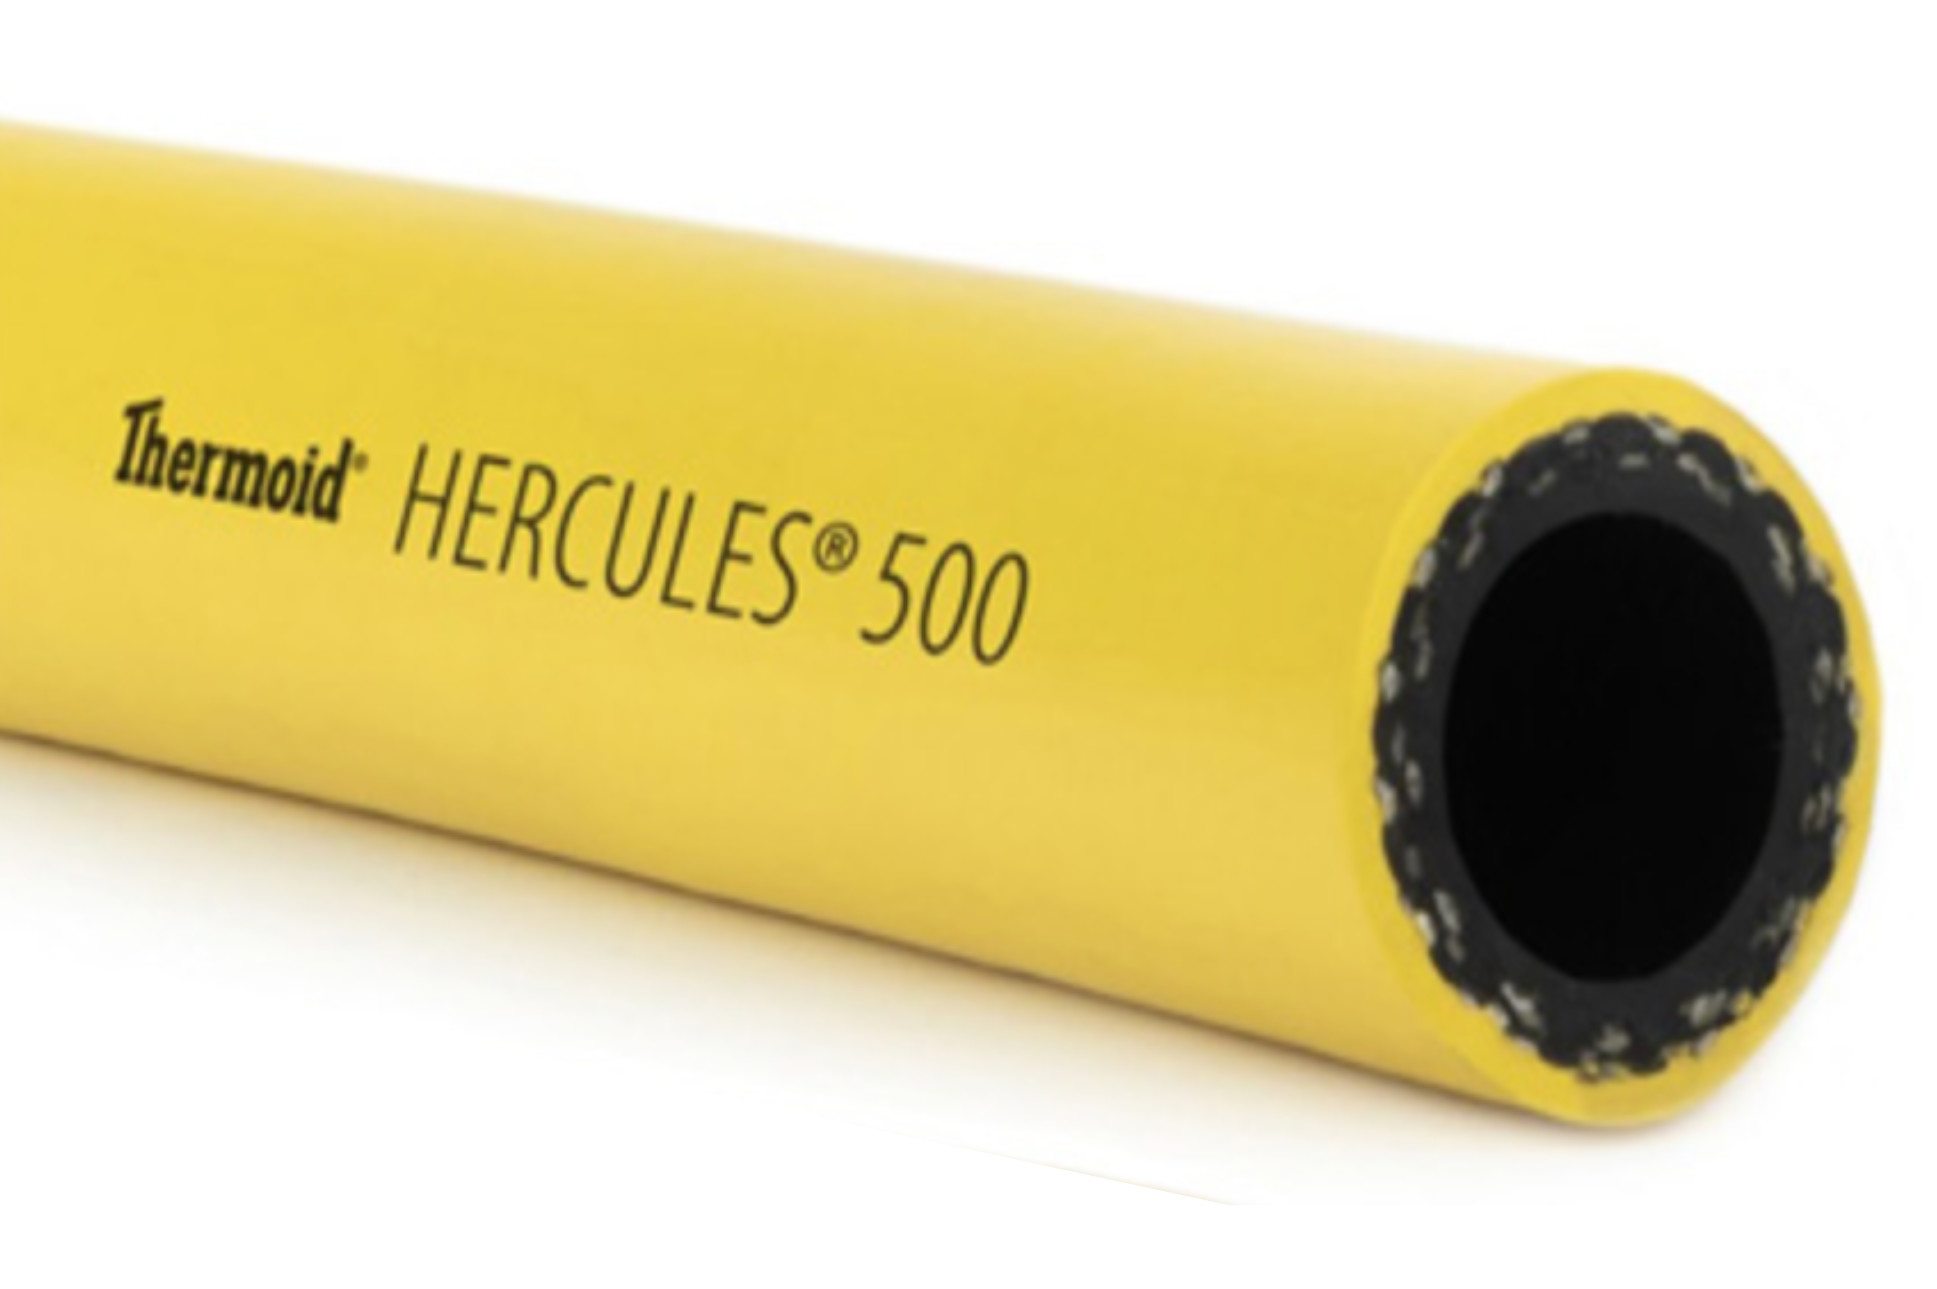 Multipurpose Rubber Hose - and 500 Couple Hercules Cut